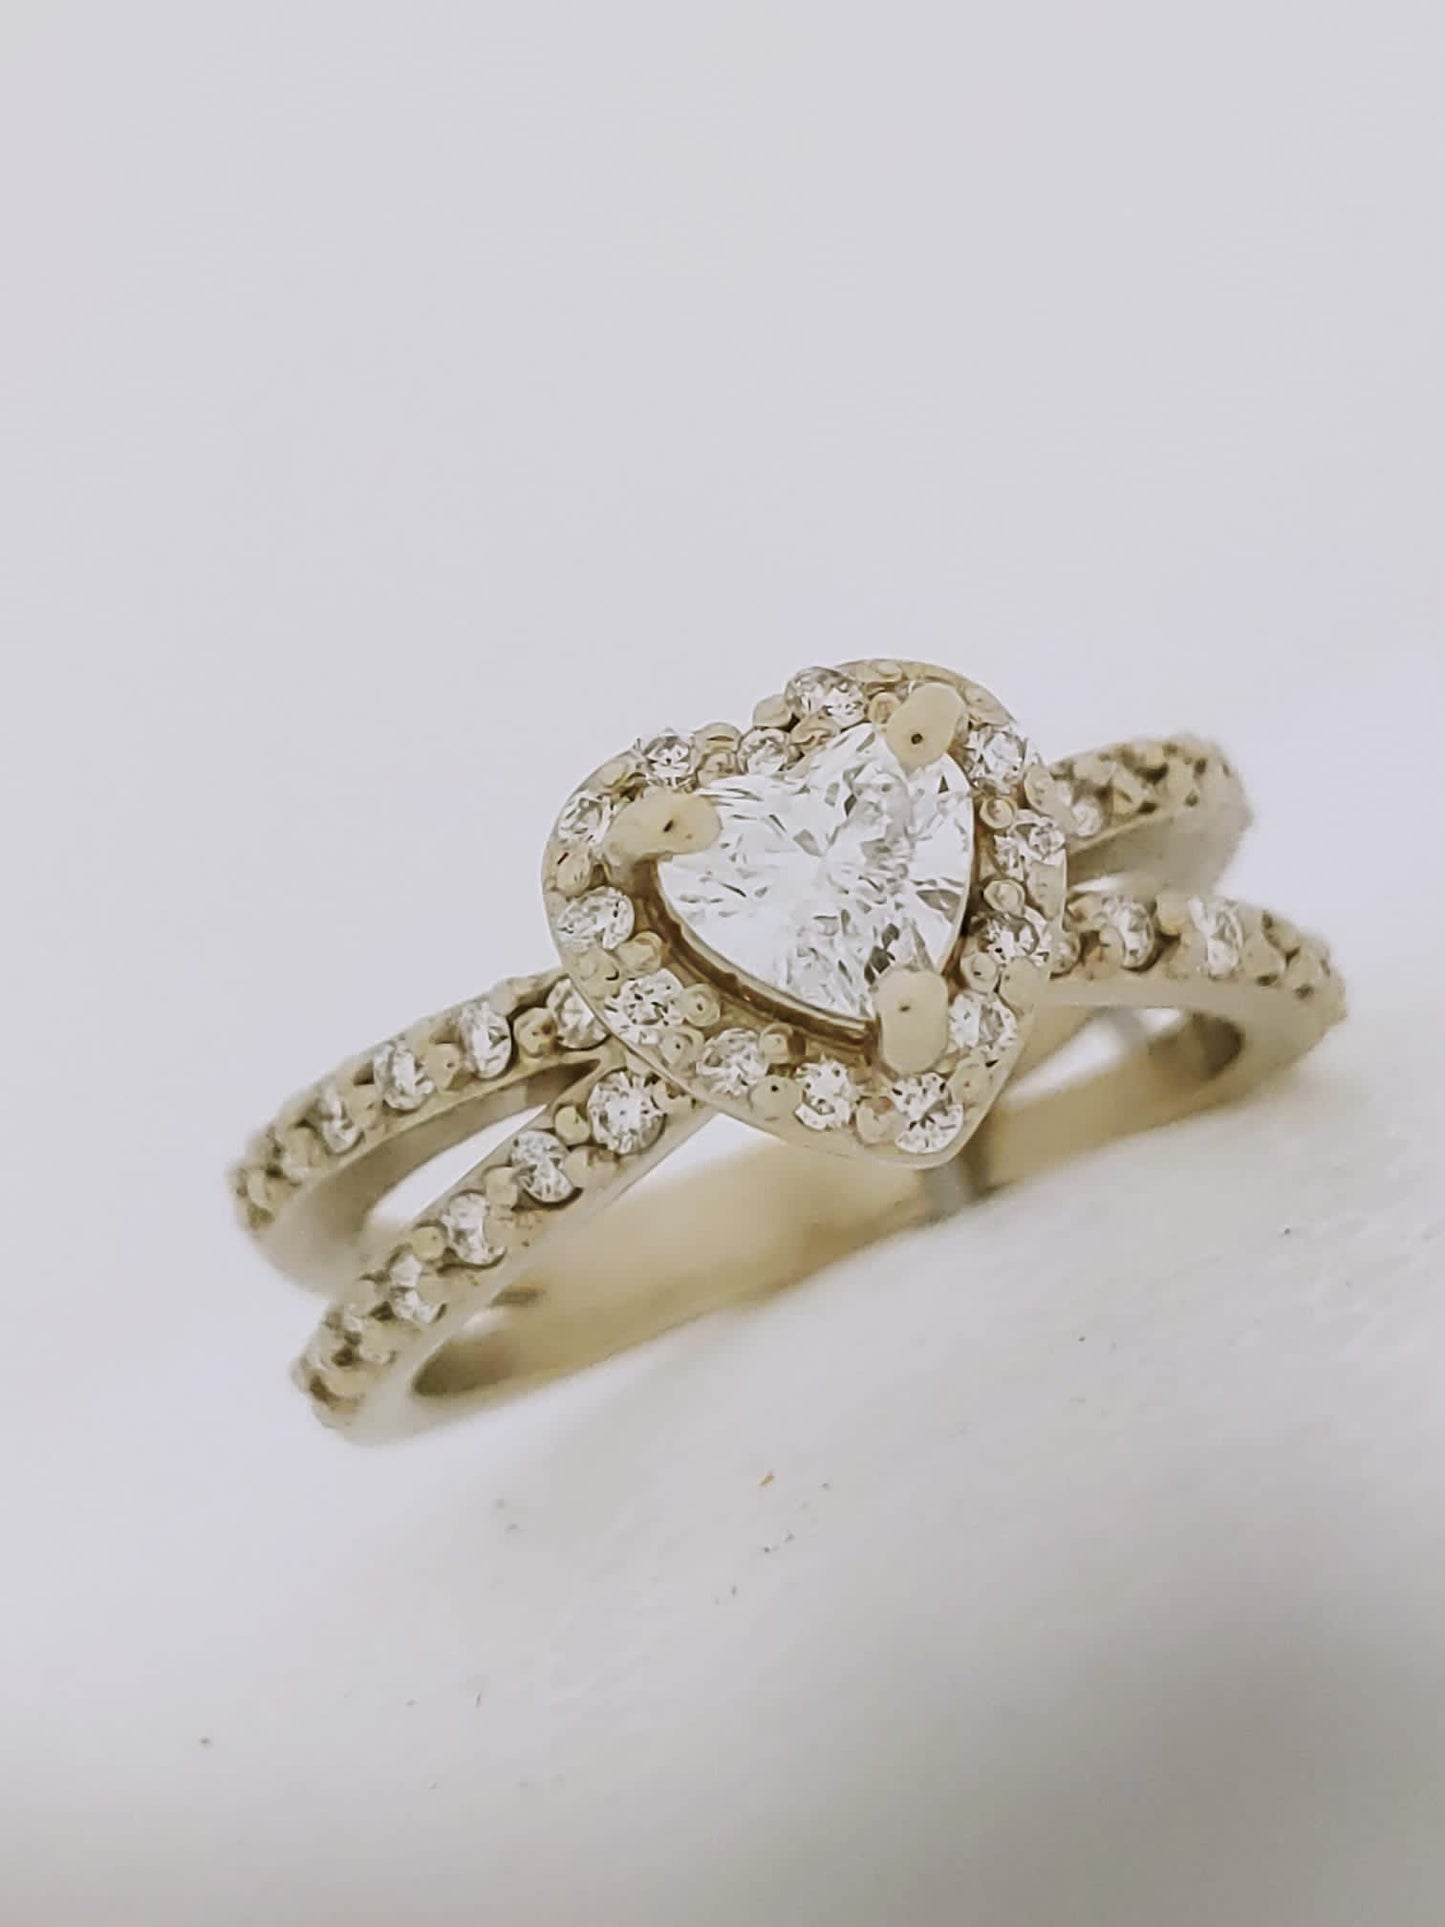 Heart Shaped Diamond Engagement Ring